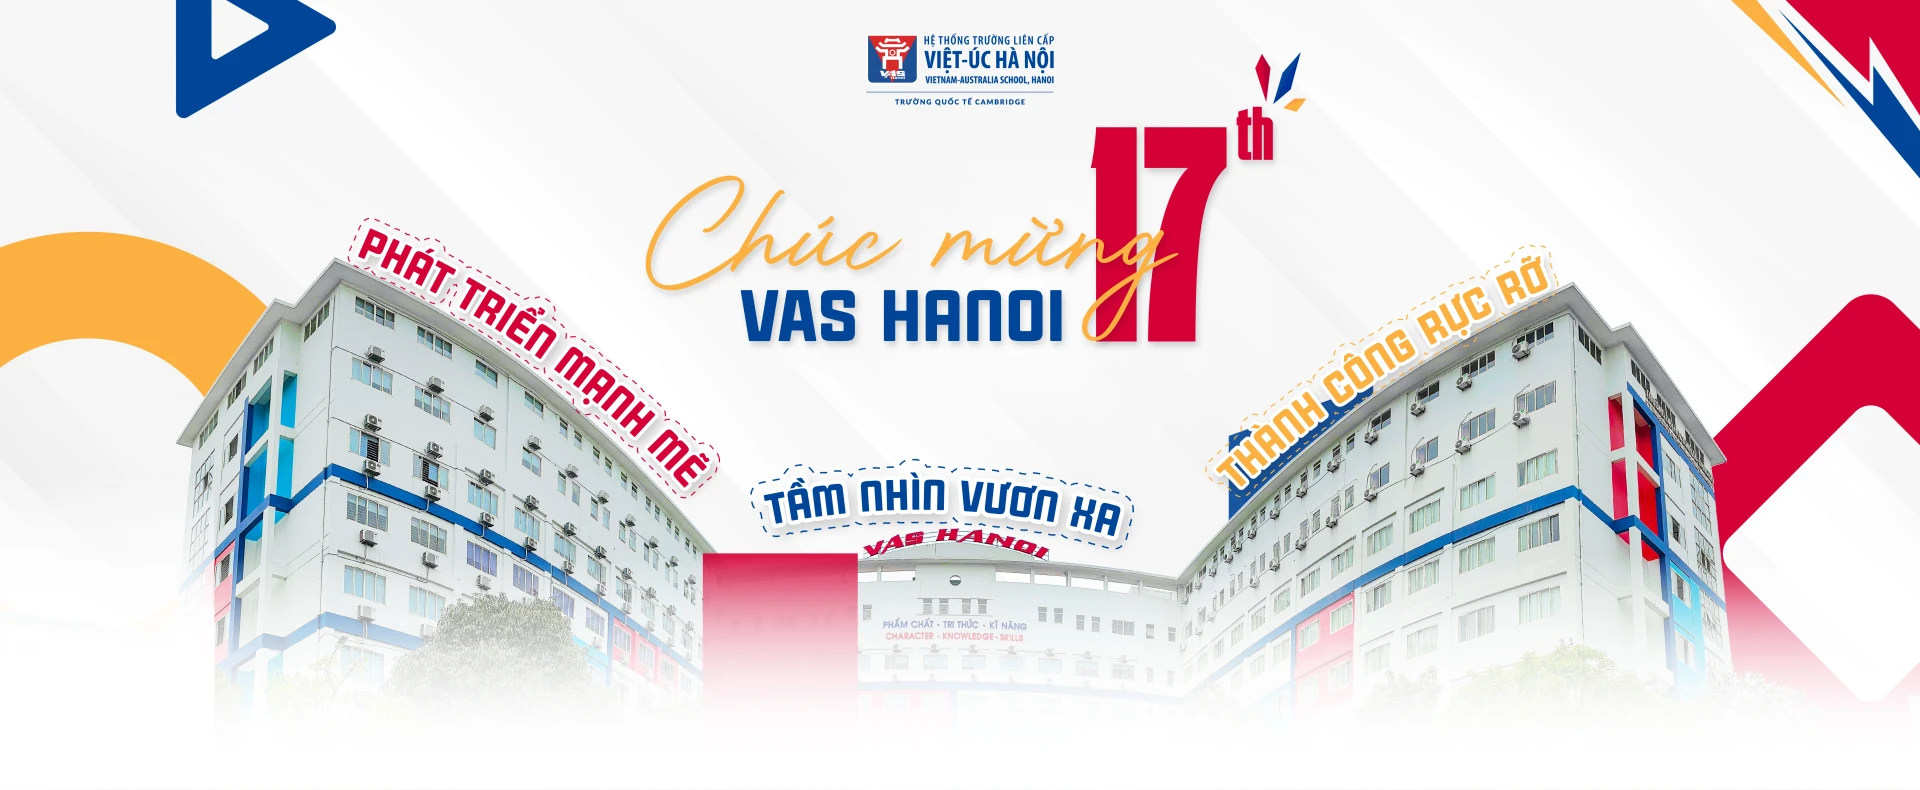 https://vashanoi.edu.vn/Kỷ niệm 17 năm thành lập VAS Hanoi